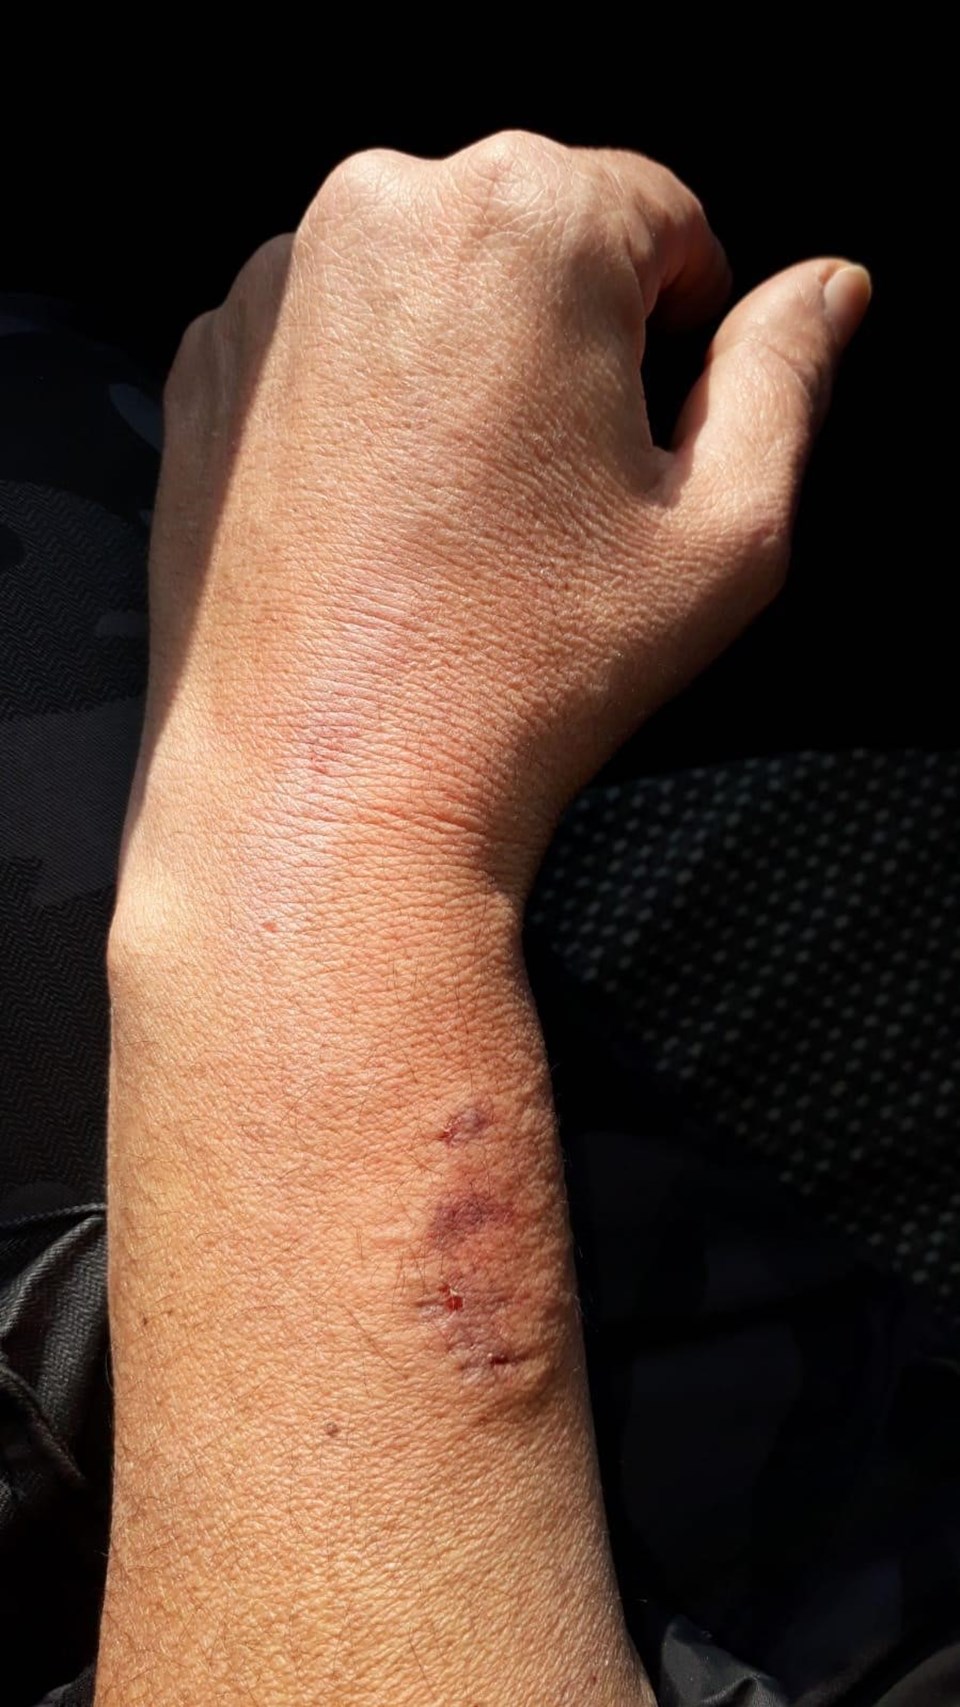 HDP'li milletvekili, polisin kolunu ısırdı - 1